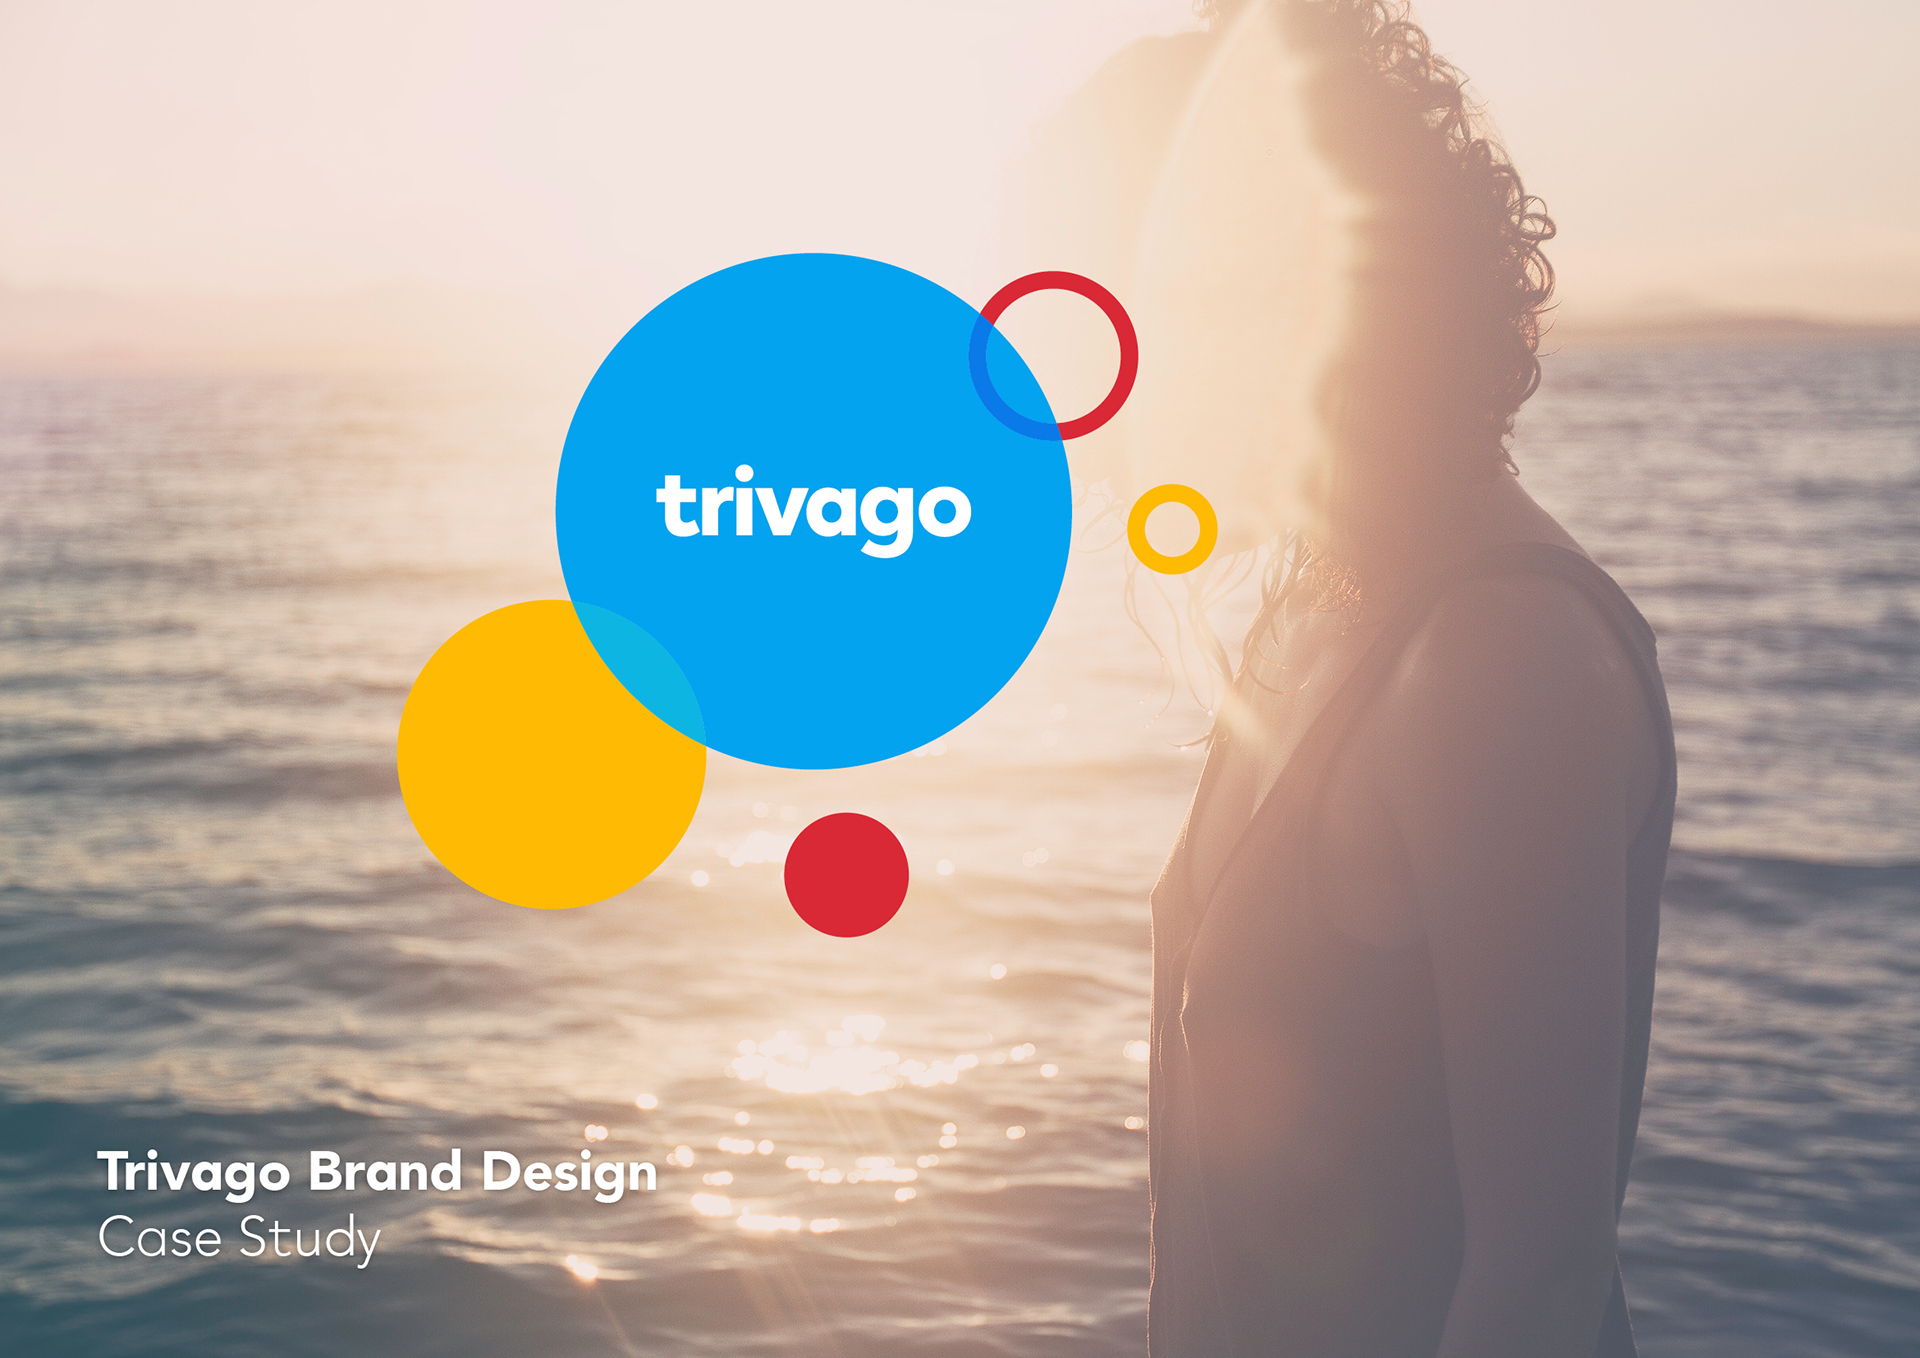 Trivago Brand Design Case Study On Behance